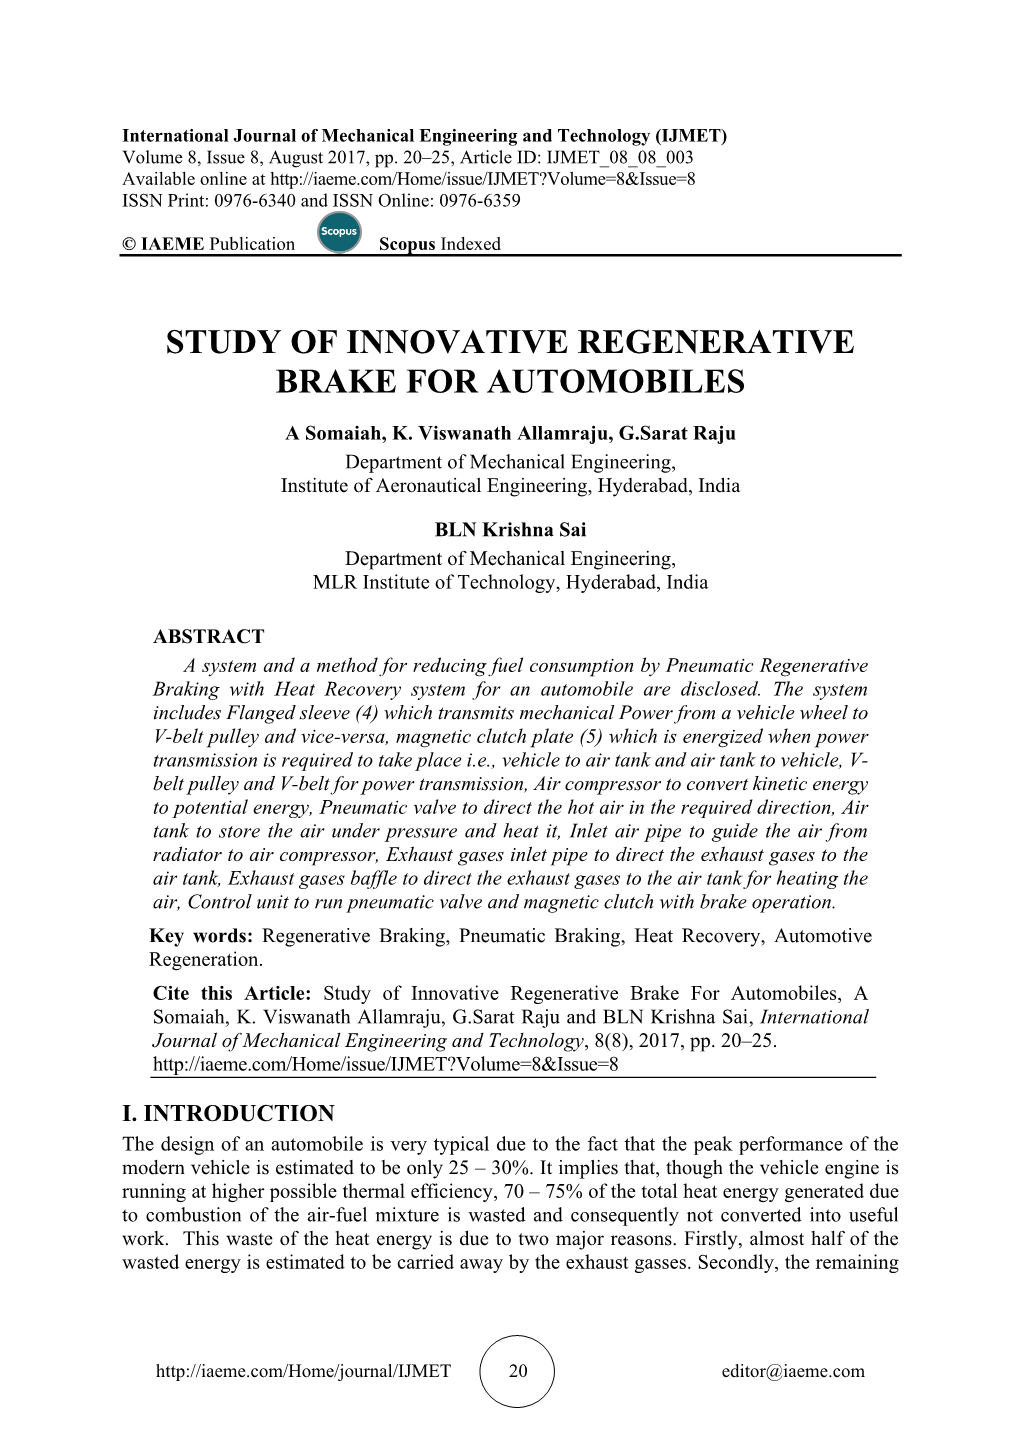 Study of Innovative Regenerative Brake for Automobiles